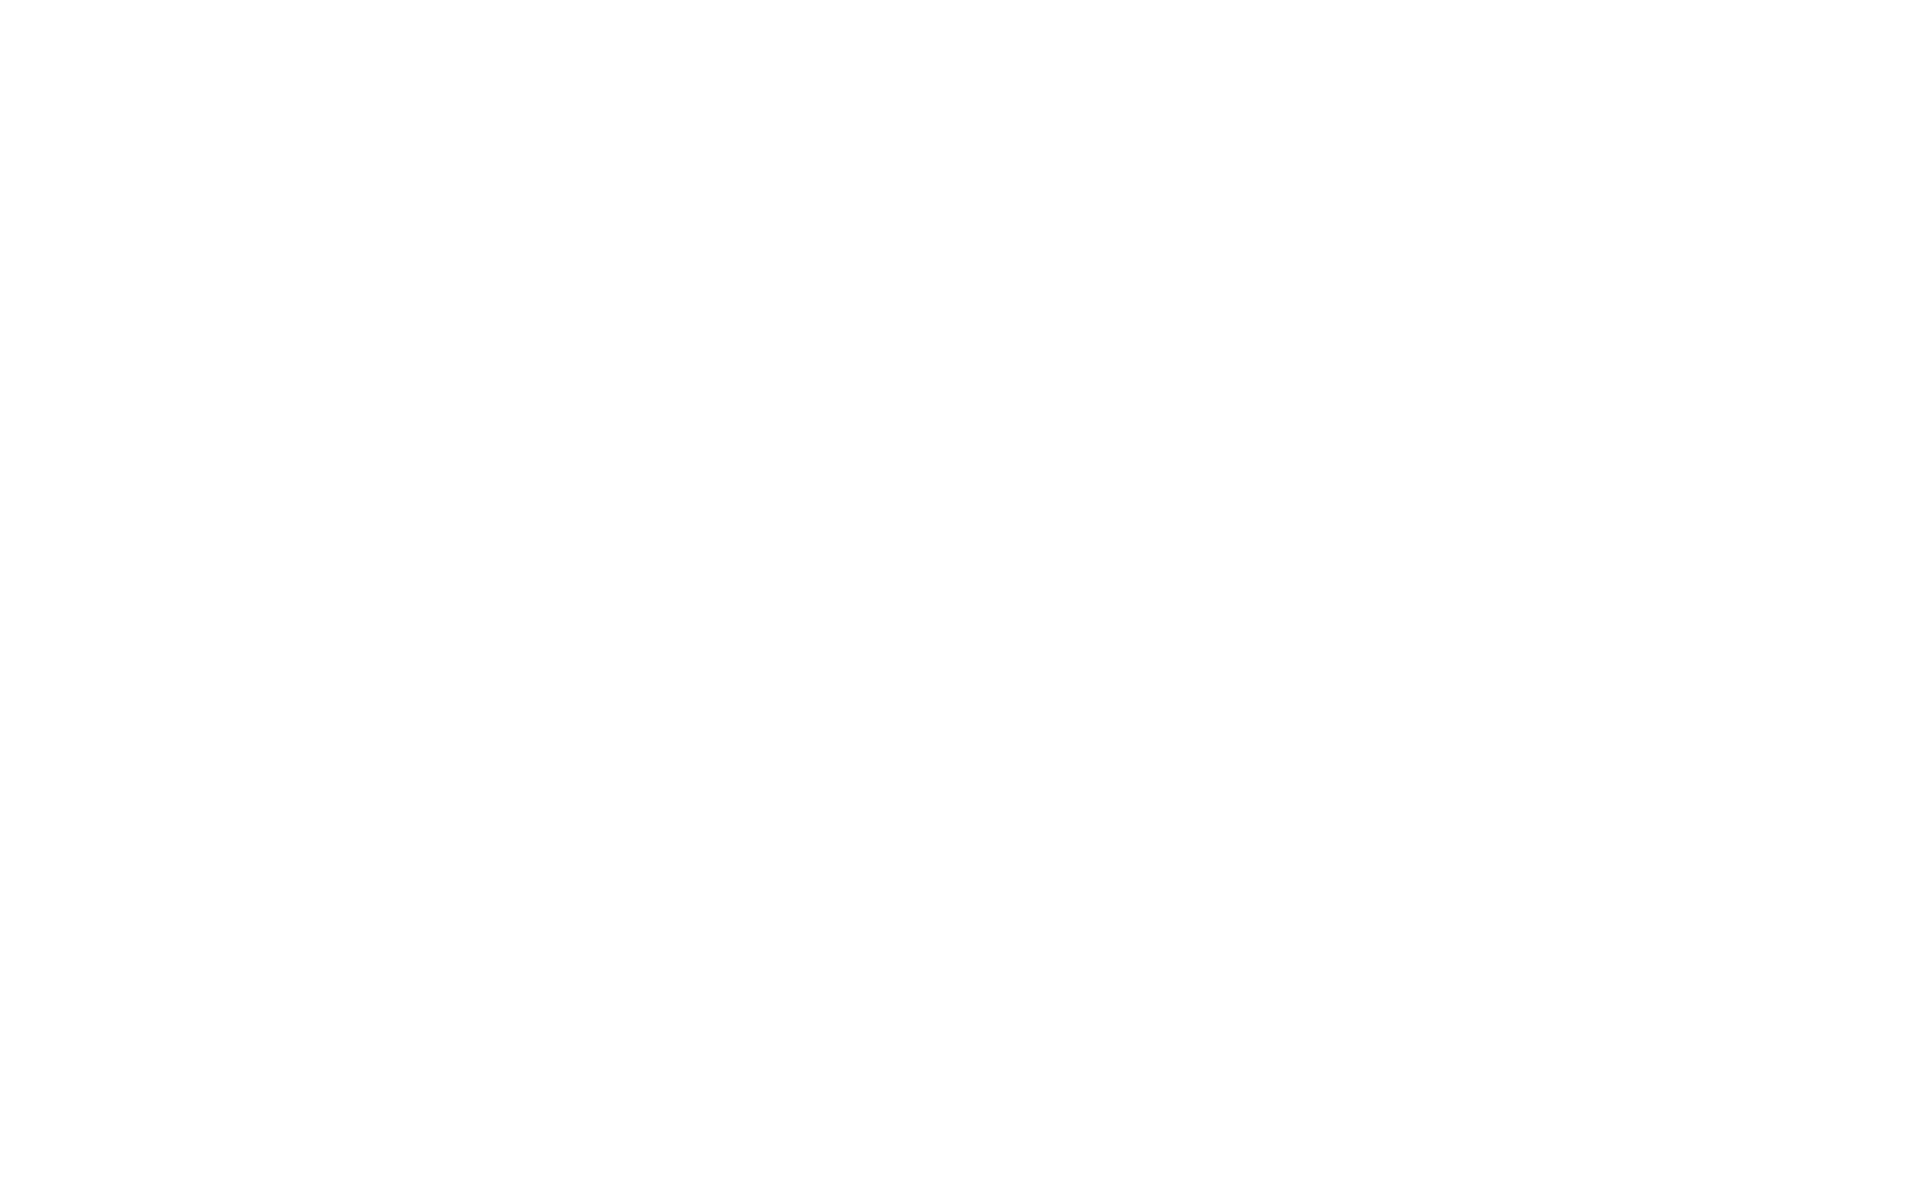 DKO Design